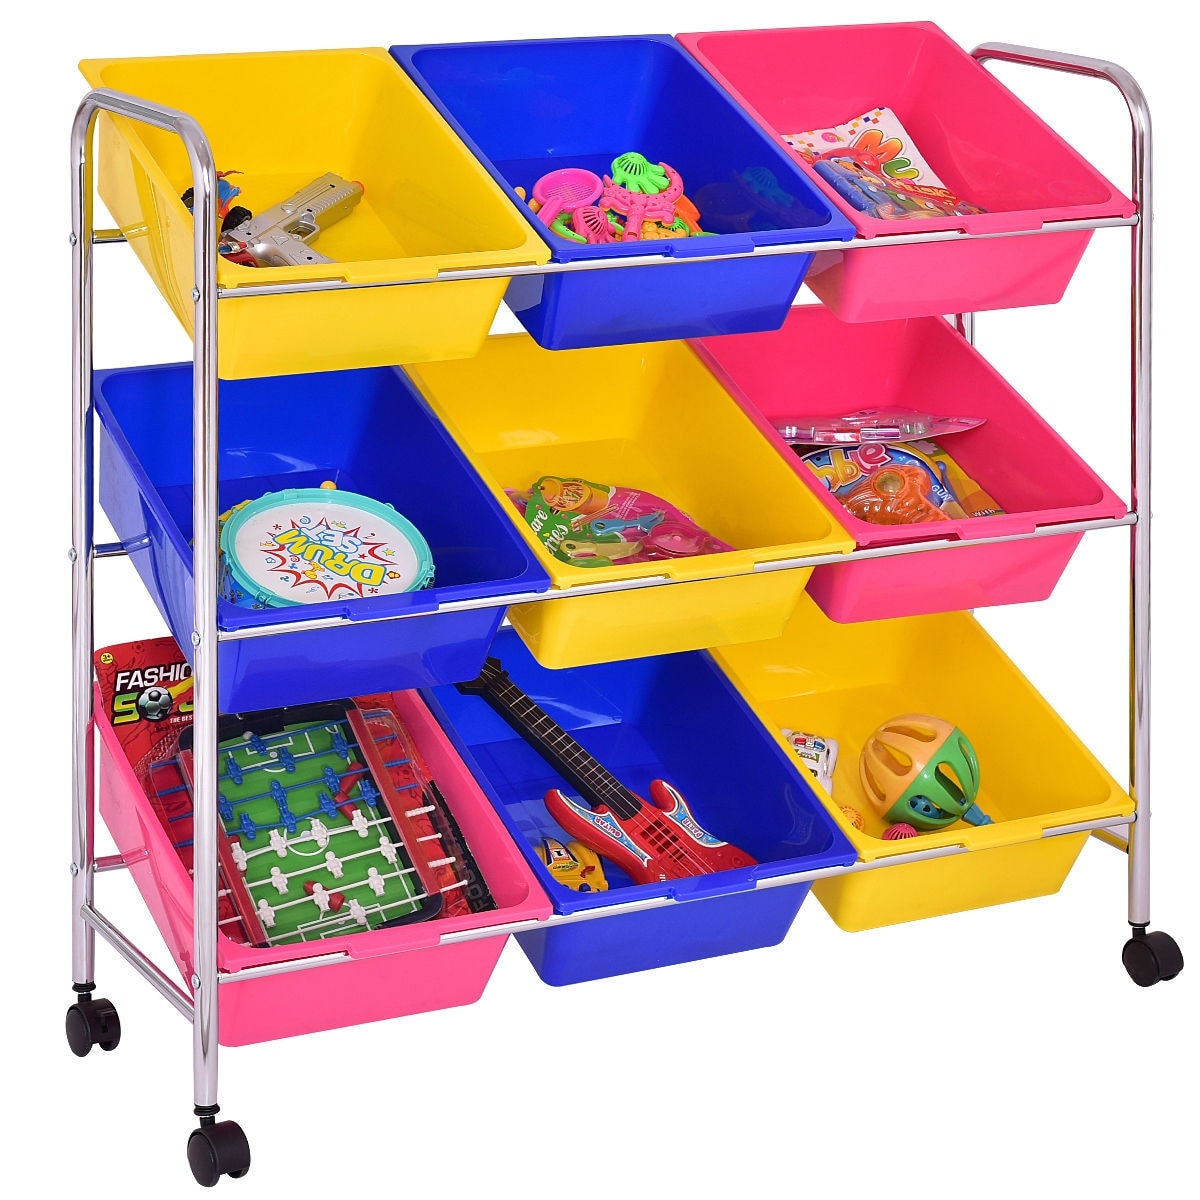 colored toy storage bins